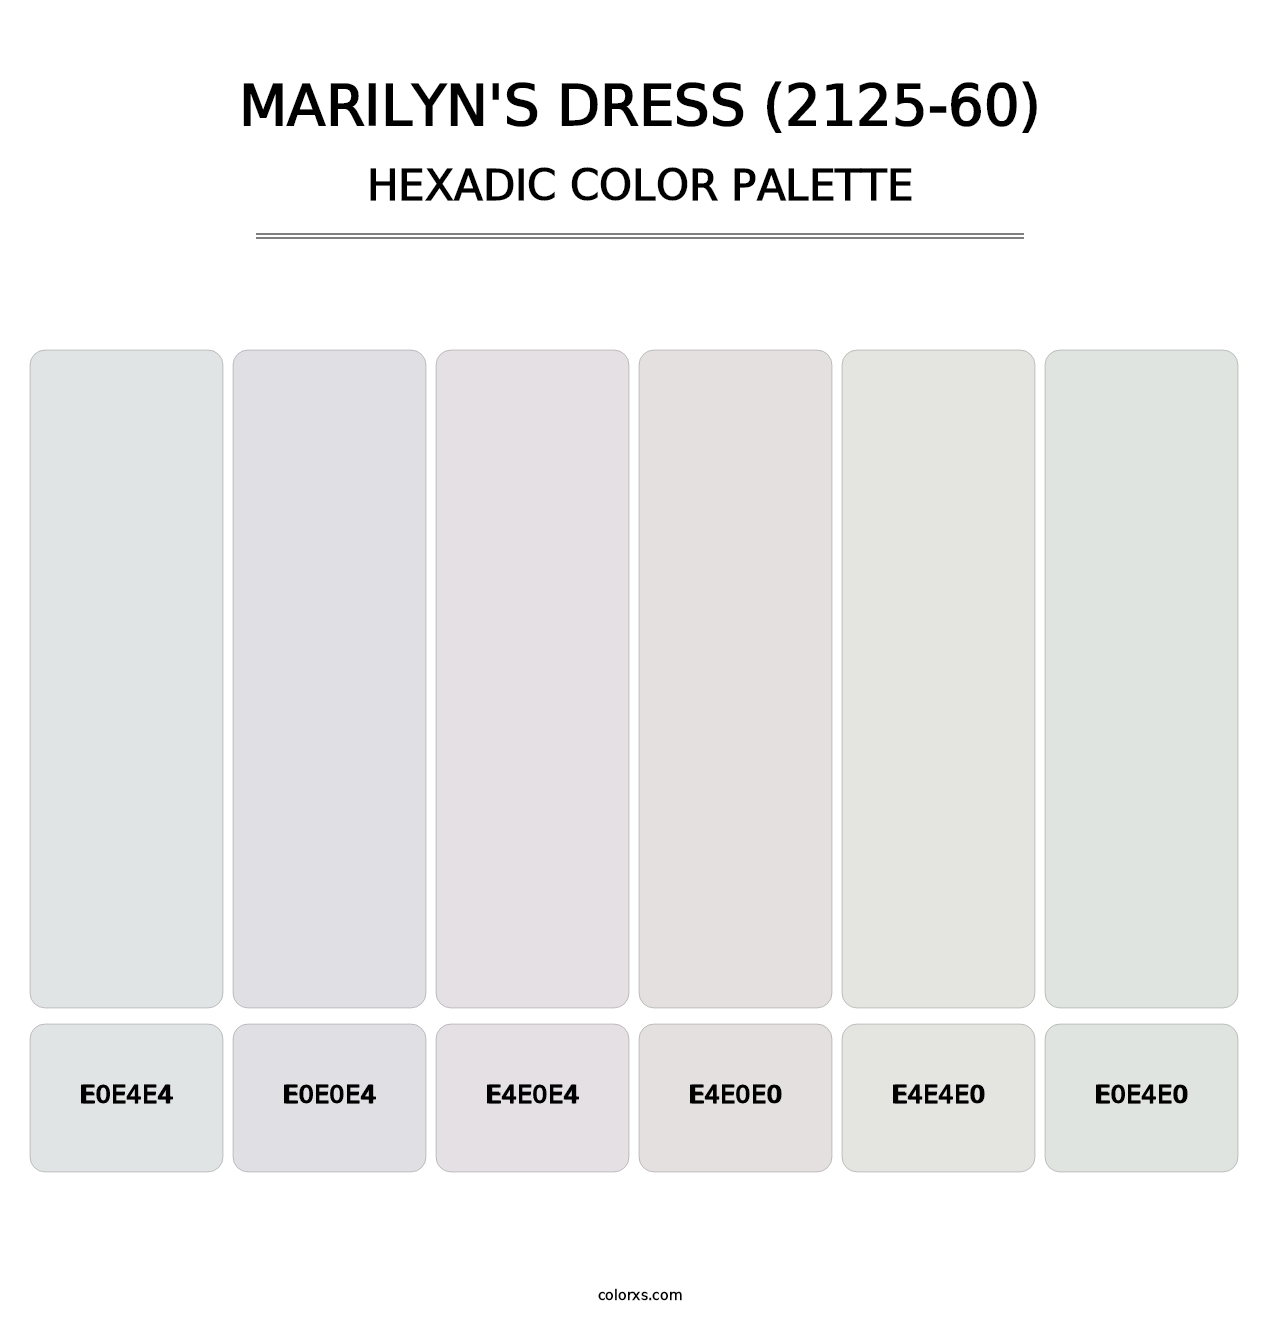 Marilyn's Dress (2125-60) - Hexadic Color Palette